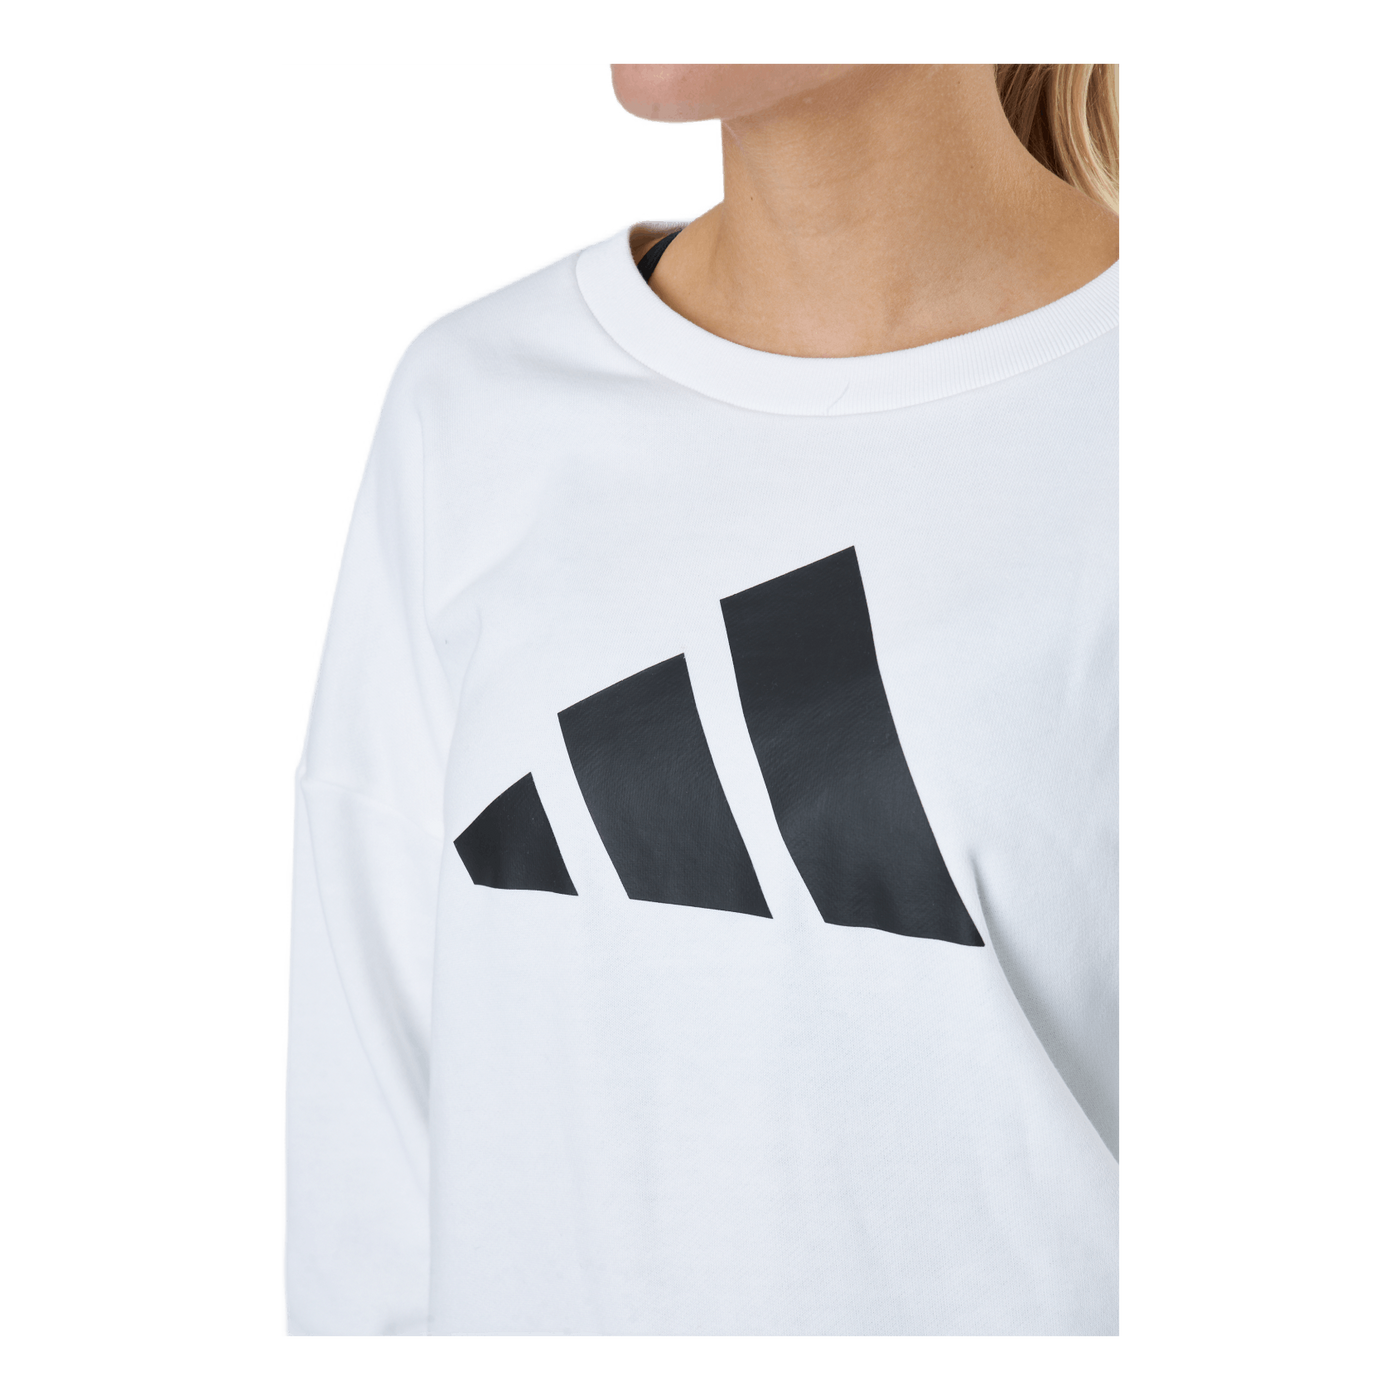 Adidas Sportswear Three Bar Sweatshirt White